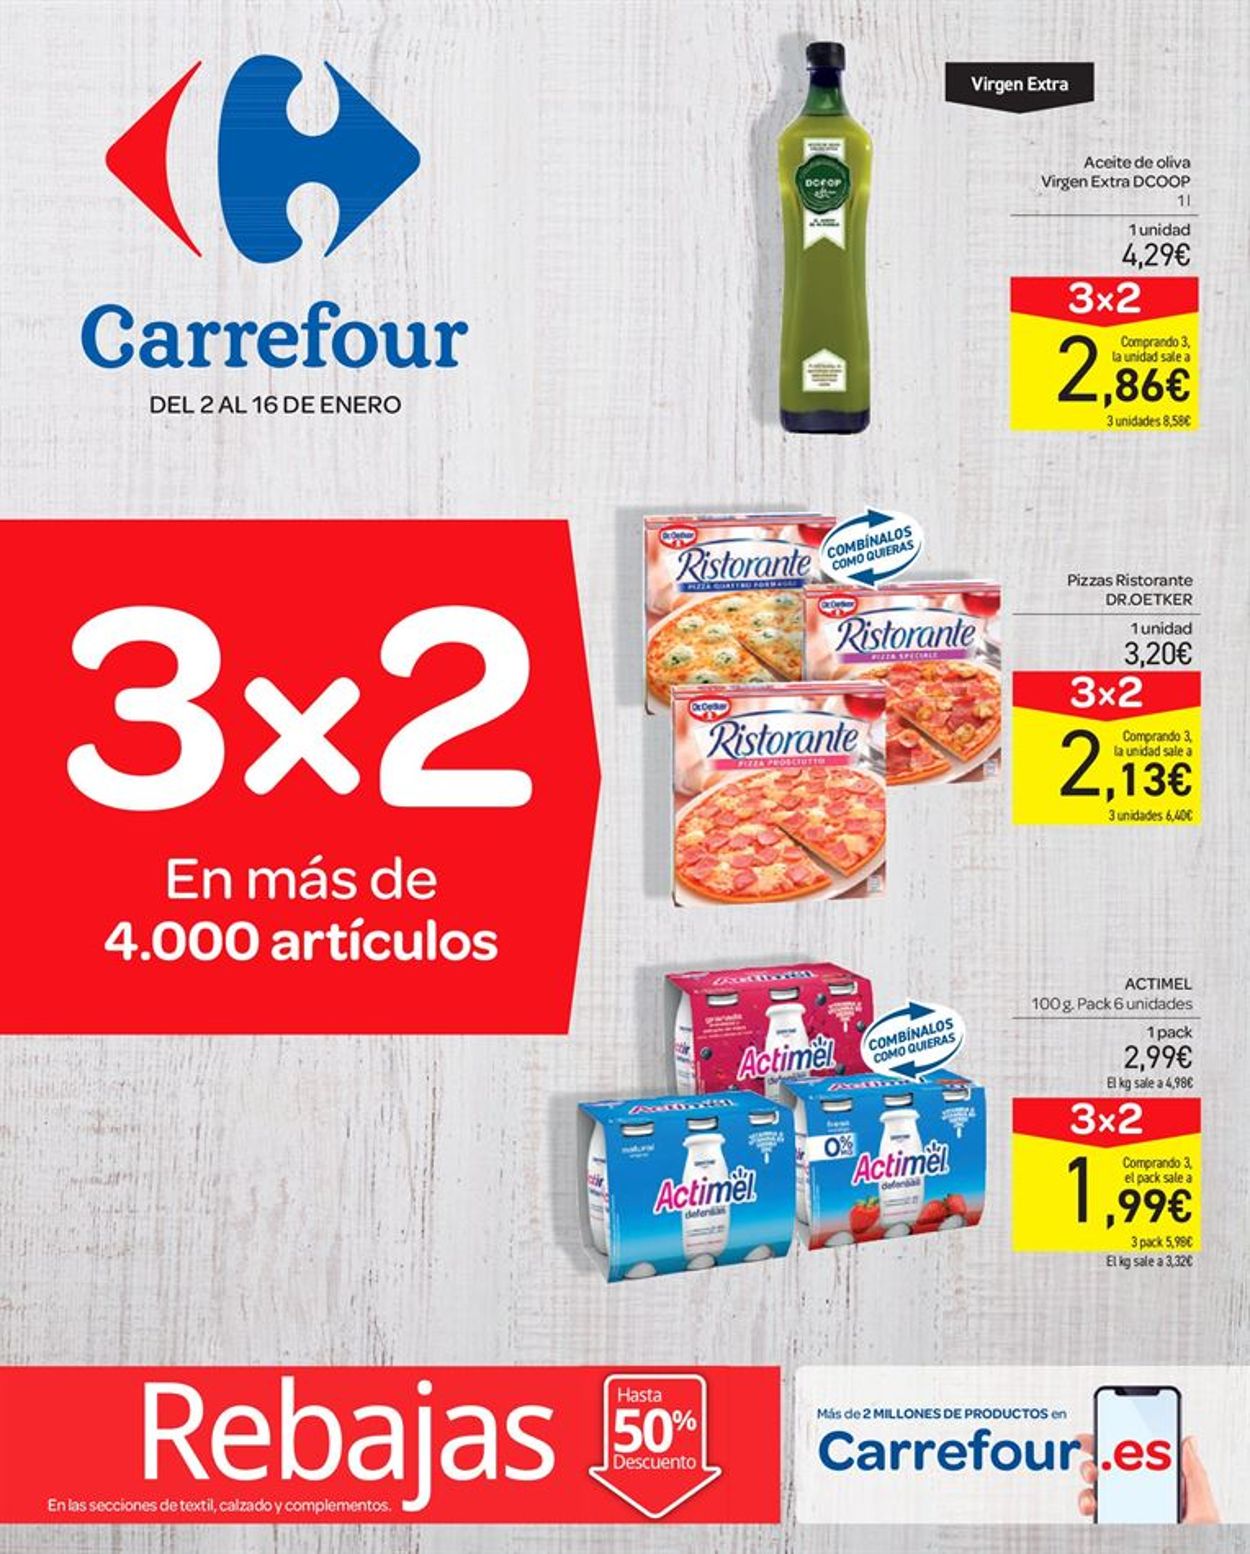 Carrefour - Actual 02.01 - 16.01.2020 | Yulak